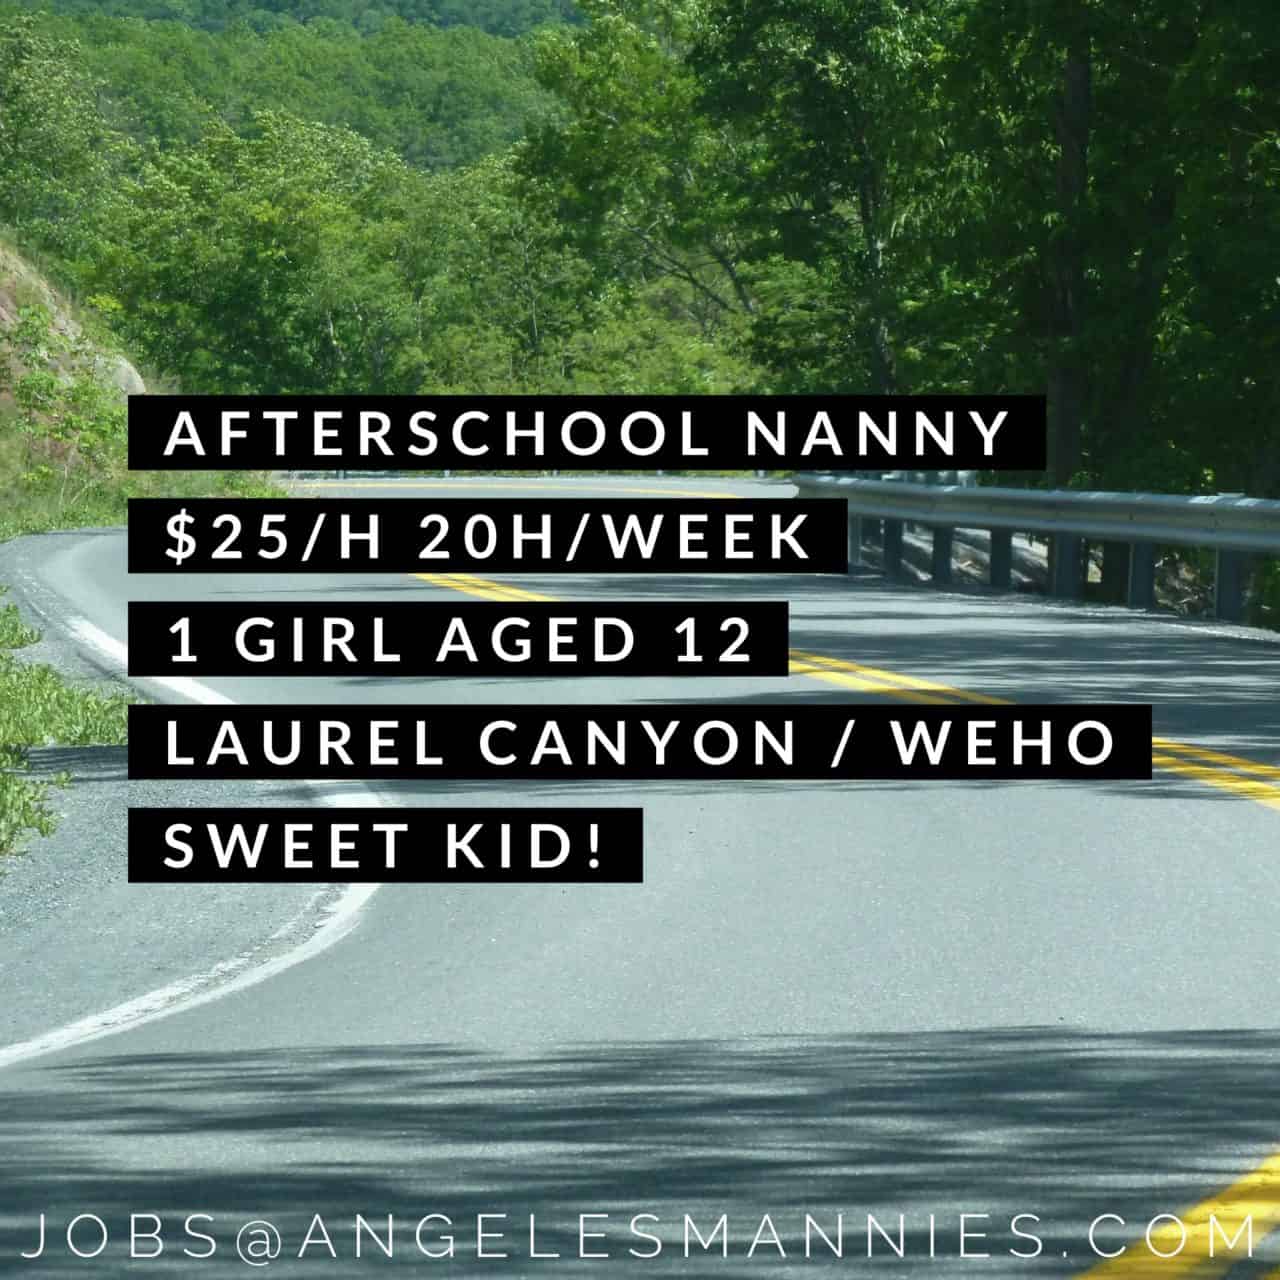 After school nanny